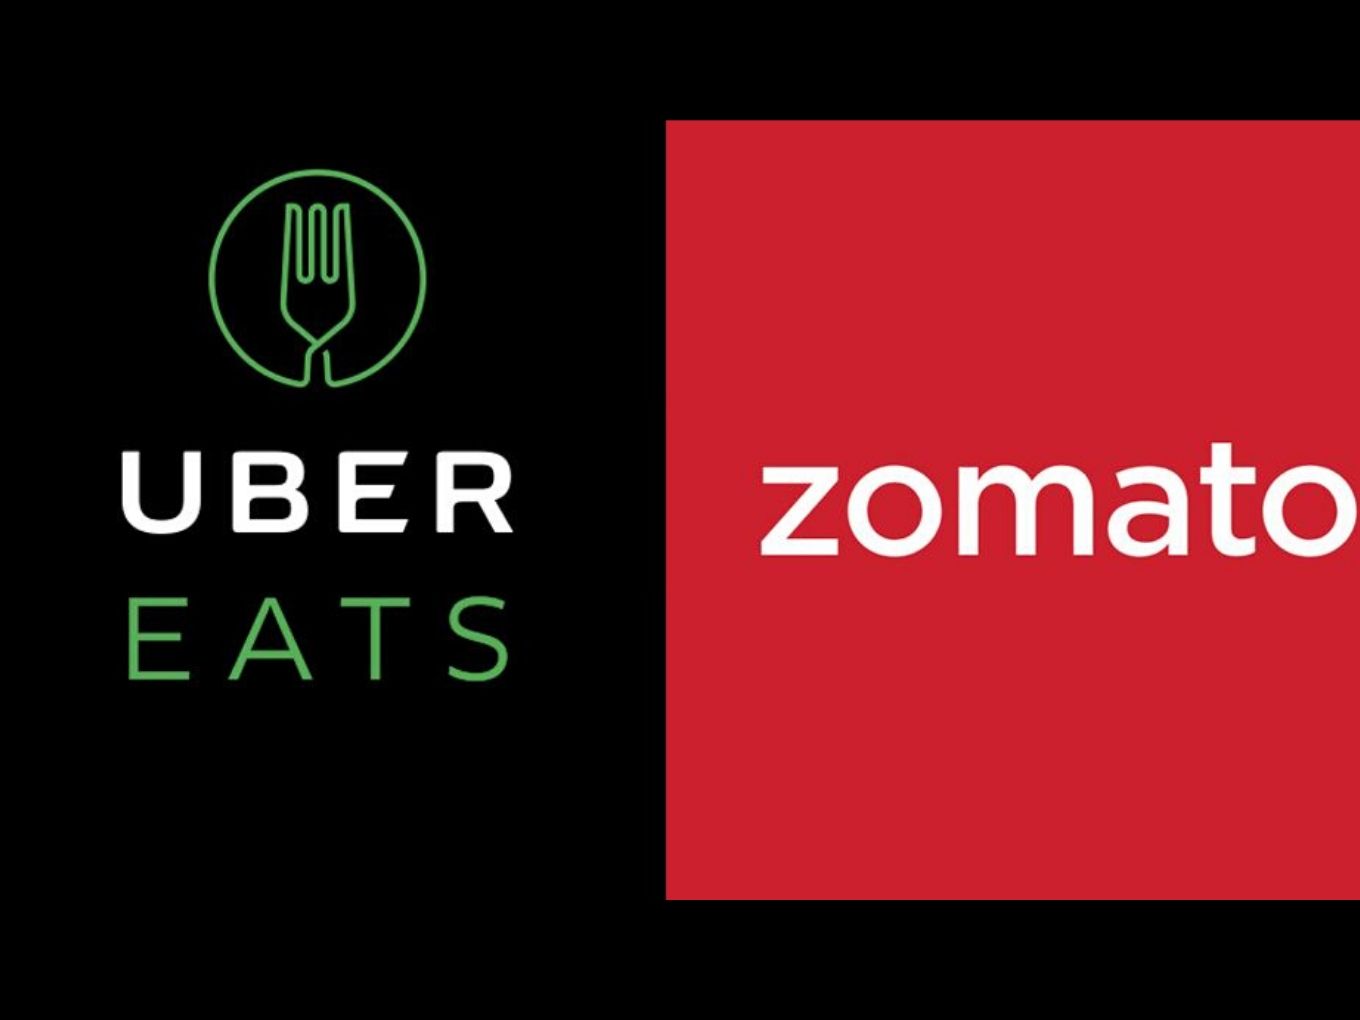 zomato uber eats acquisition case study pdf